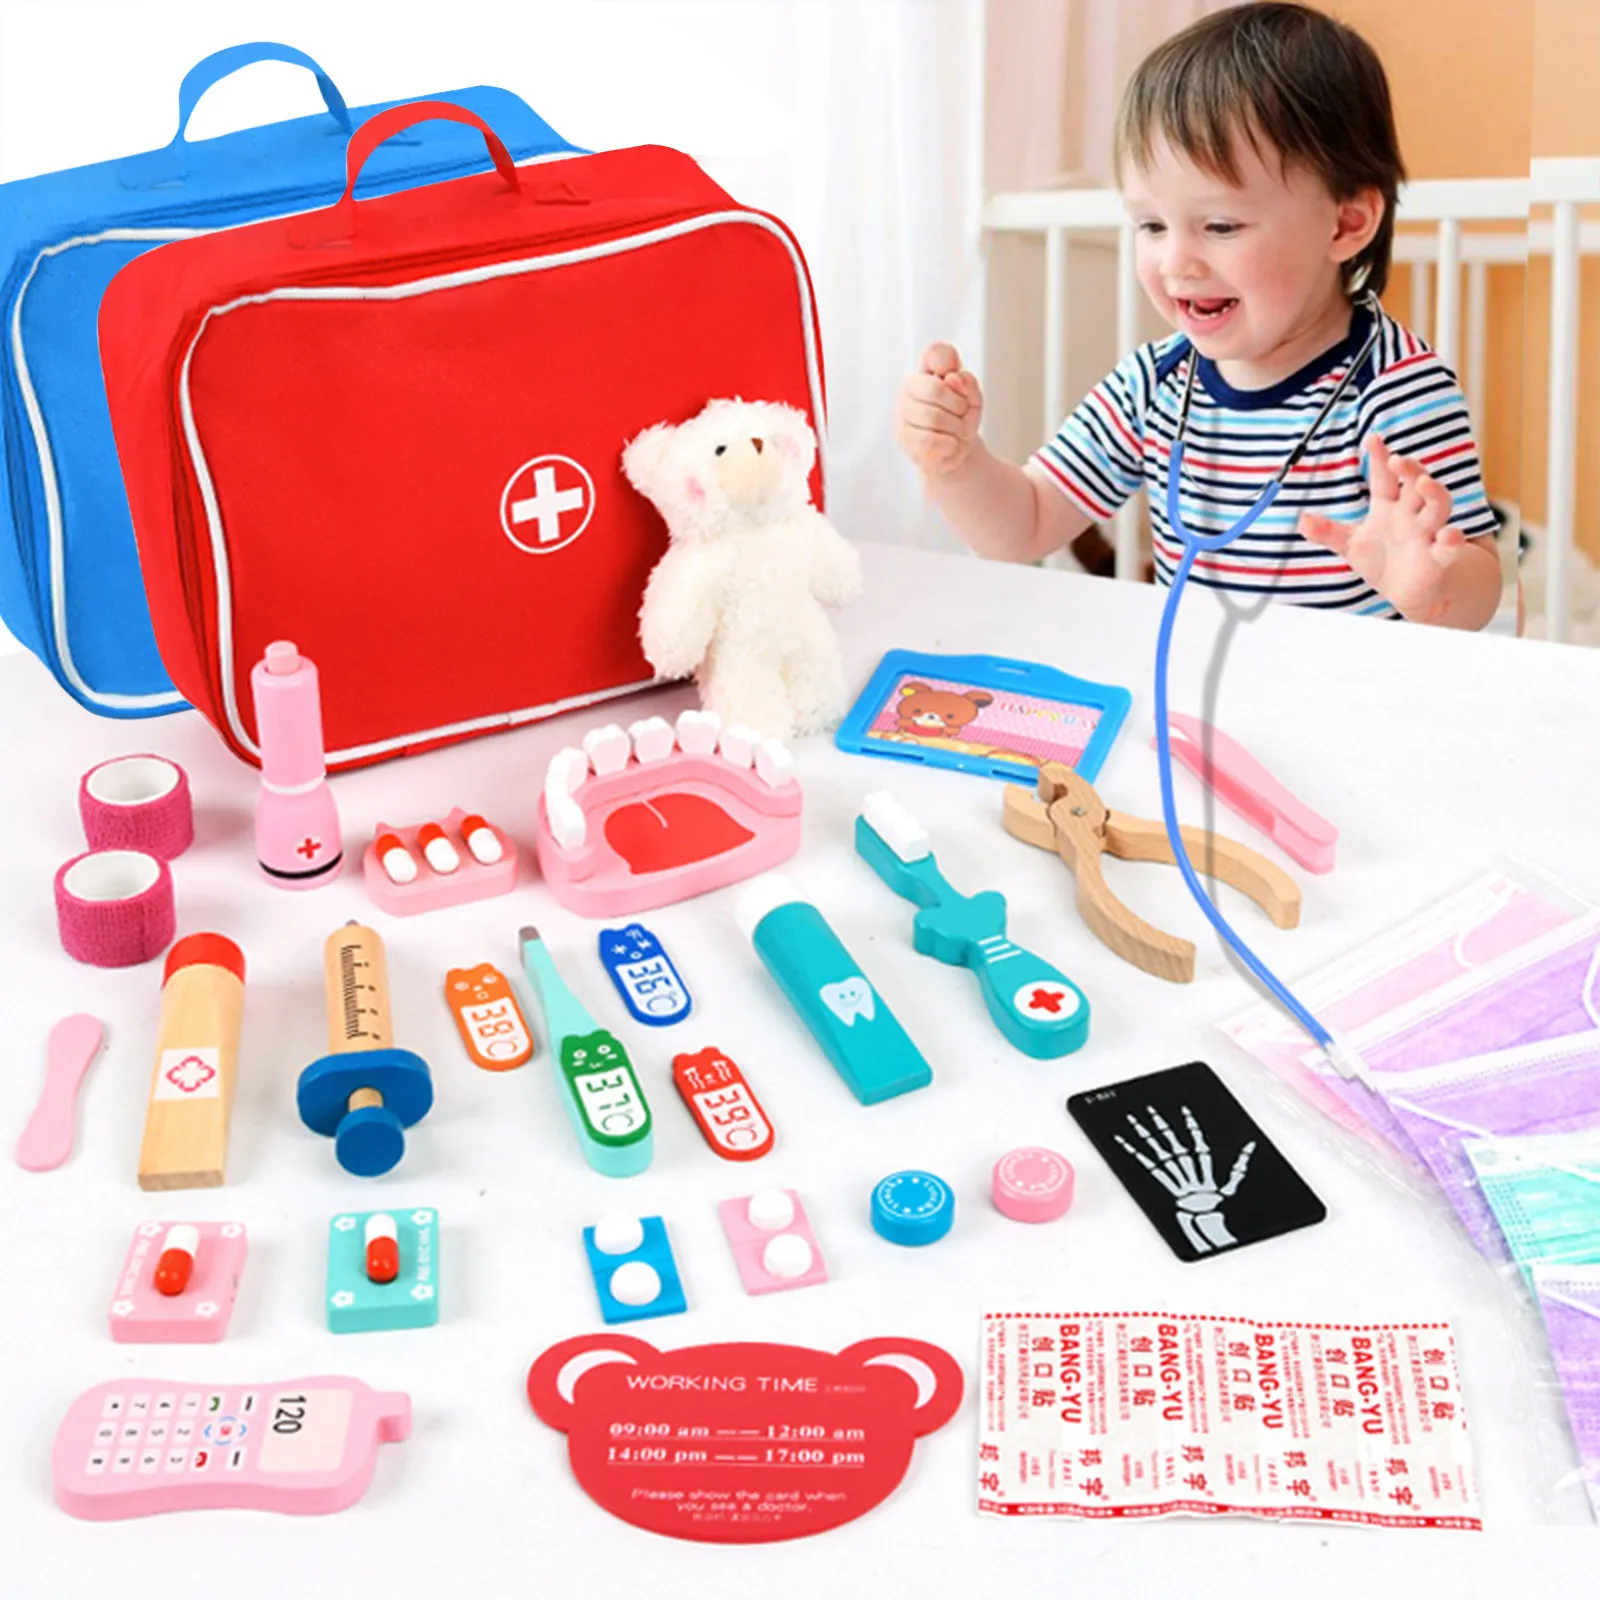 

Doctor Toys Kids Wooden Pretend Play Kit Games for Girls Boys Red Medical Dentist Medicine Box Cloth Bags for Children Set Gift